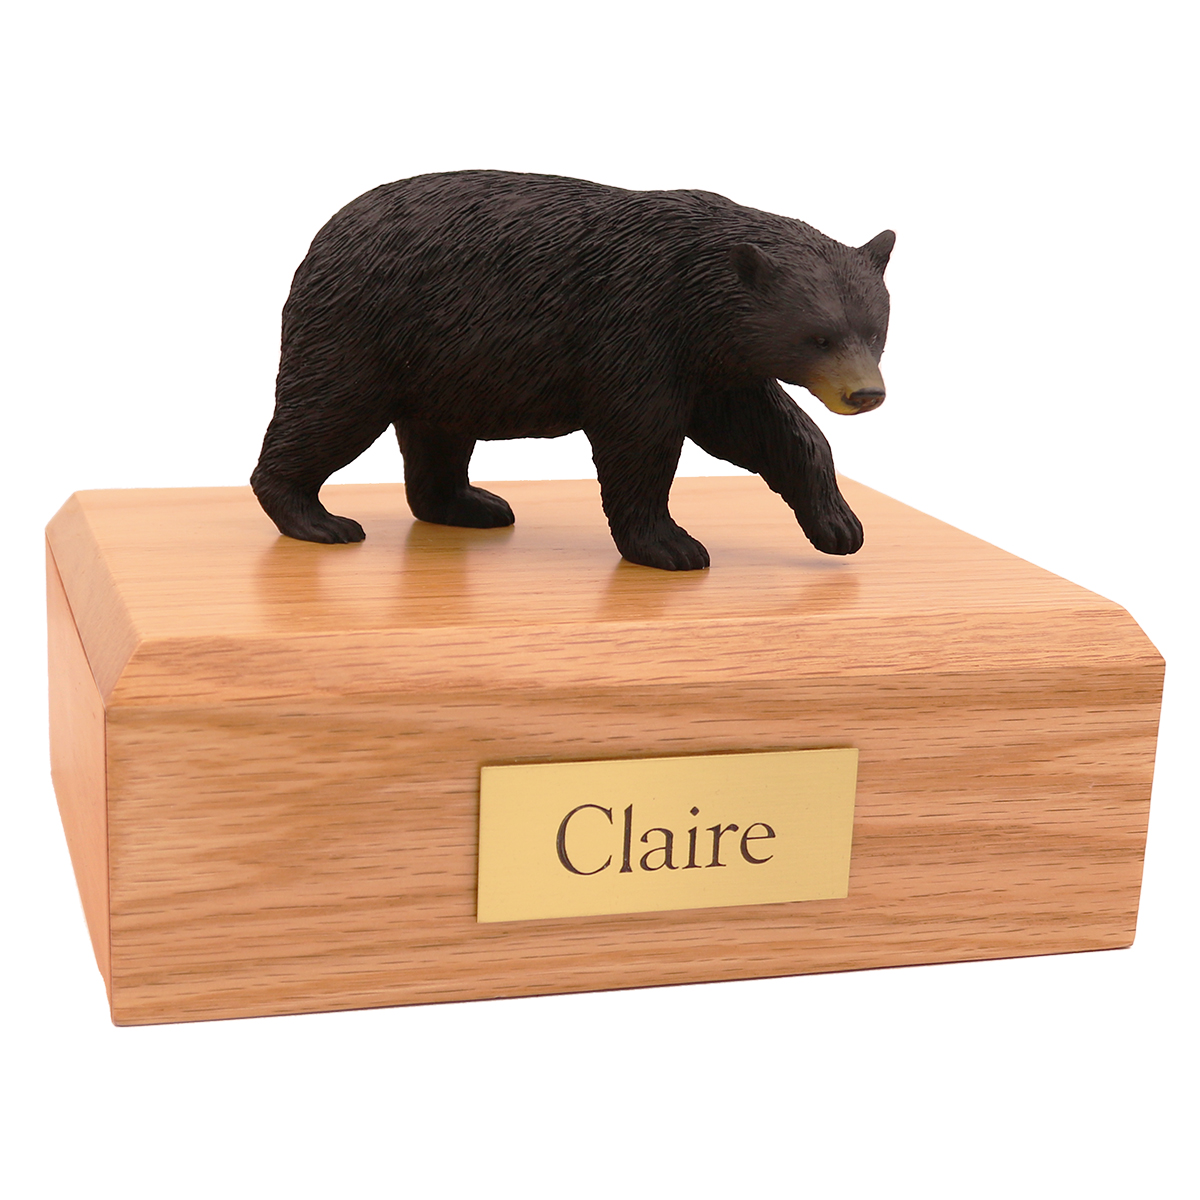 Black Bear - Figurine Urn